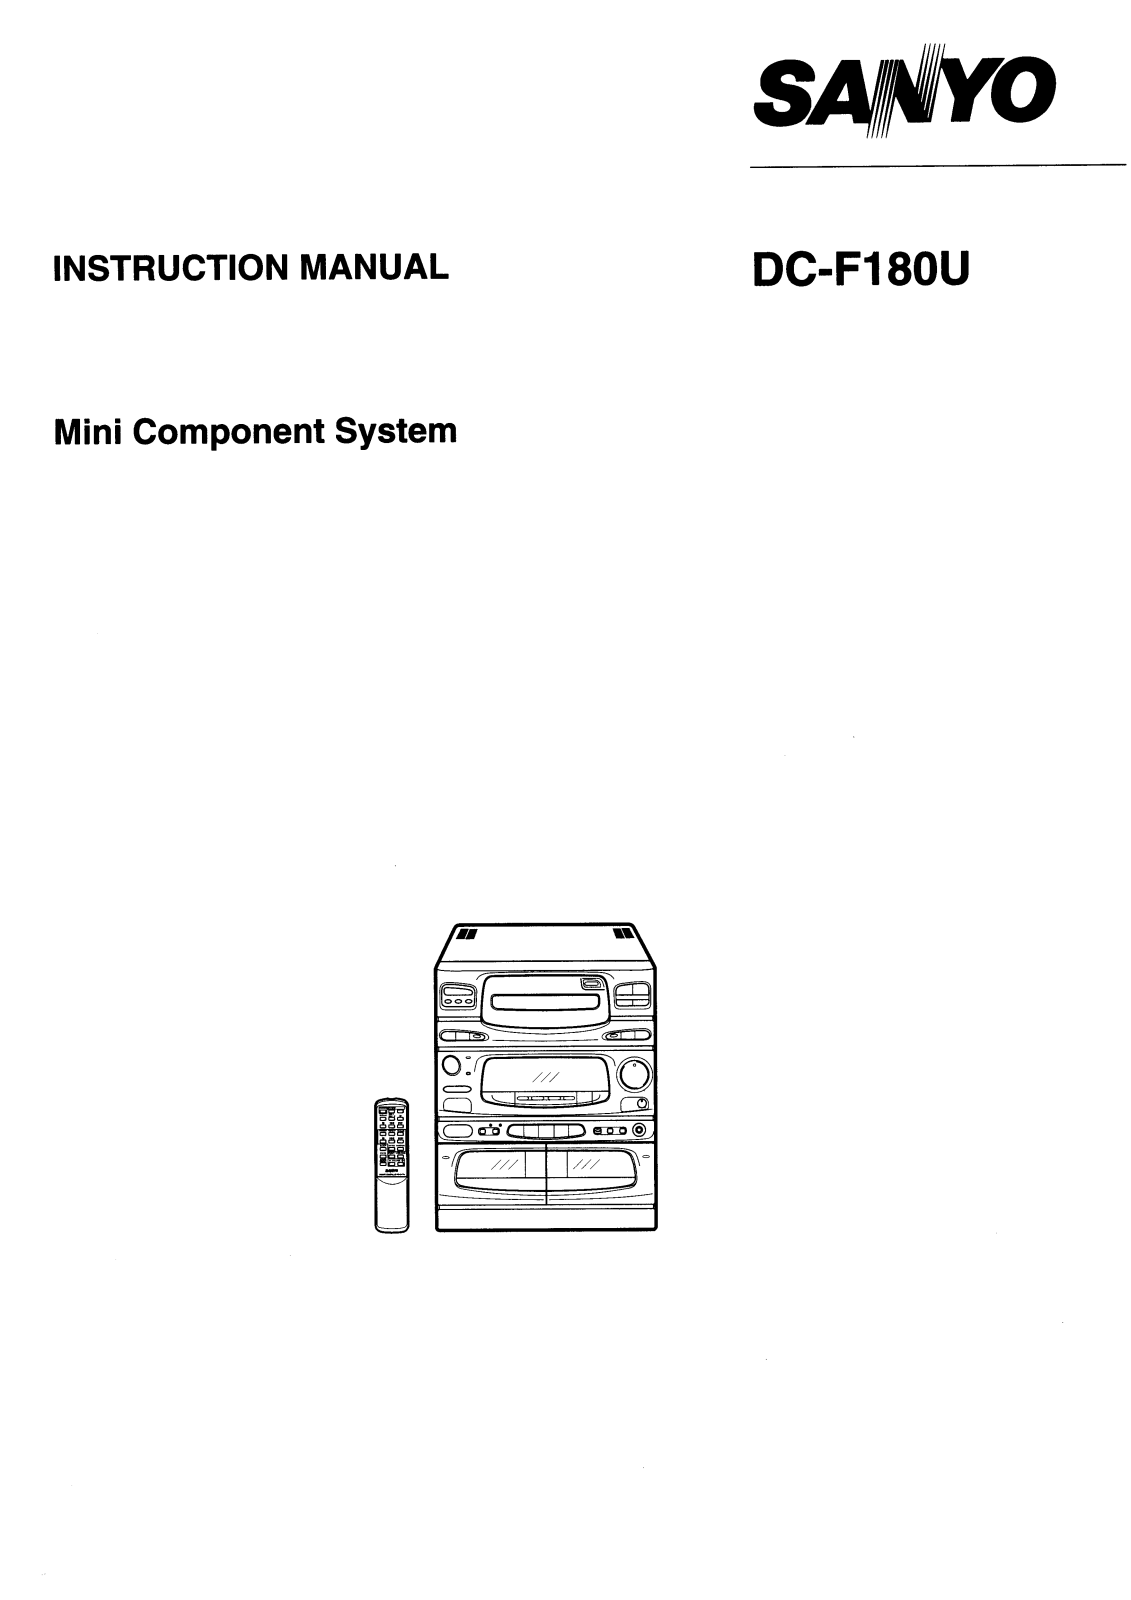 Sanyo DC-F180U Instruction Manual